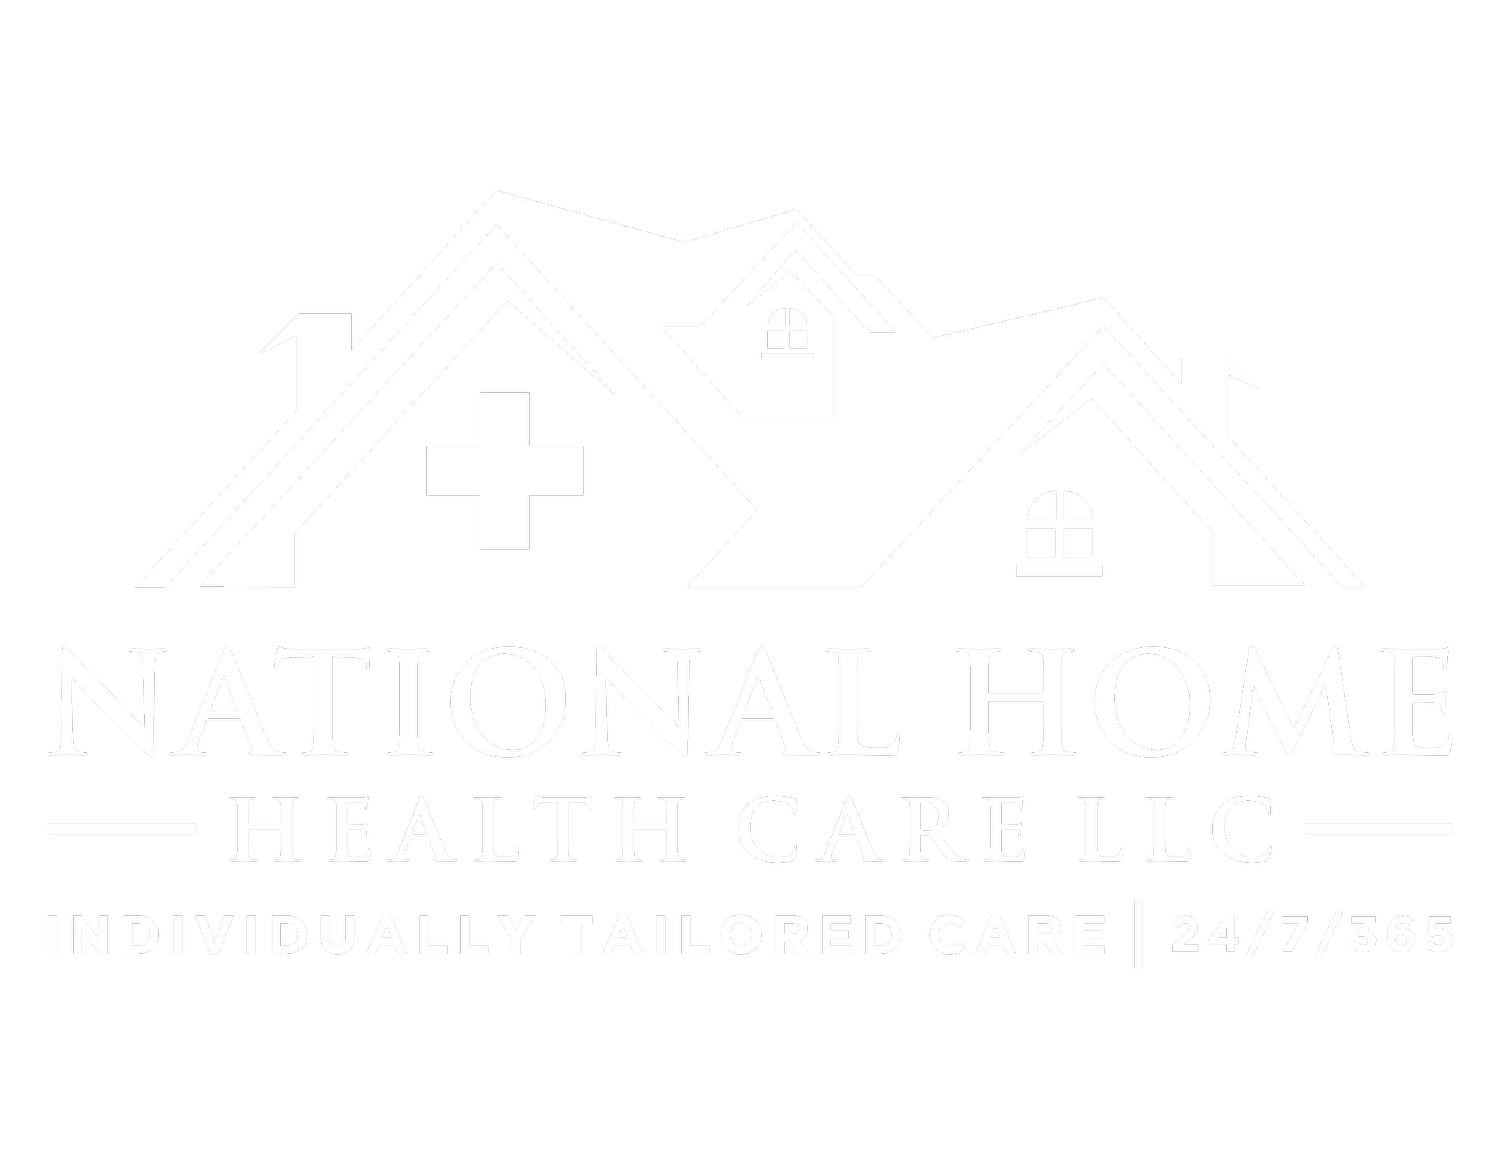 National Home Health Care LLC